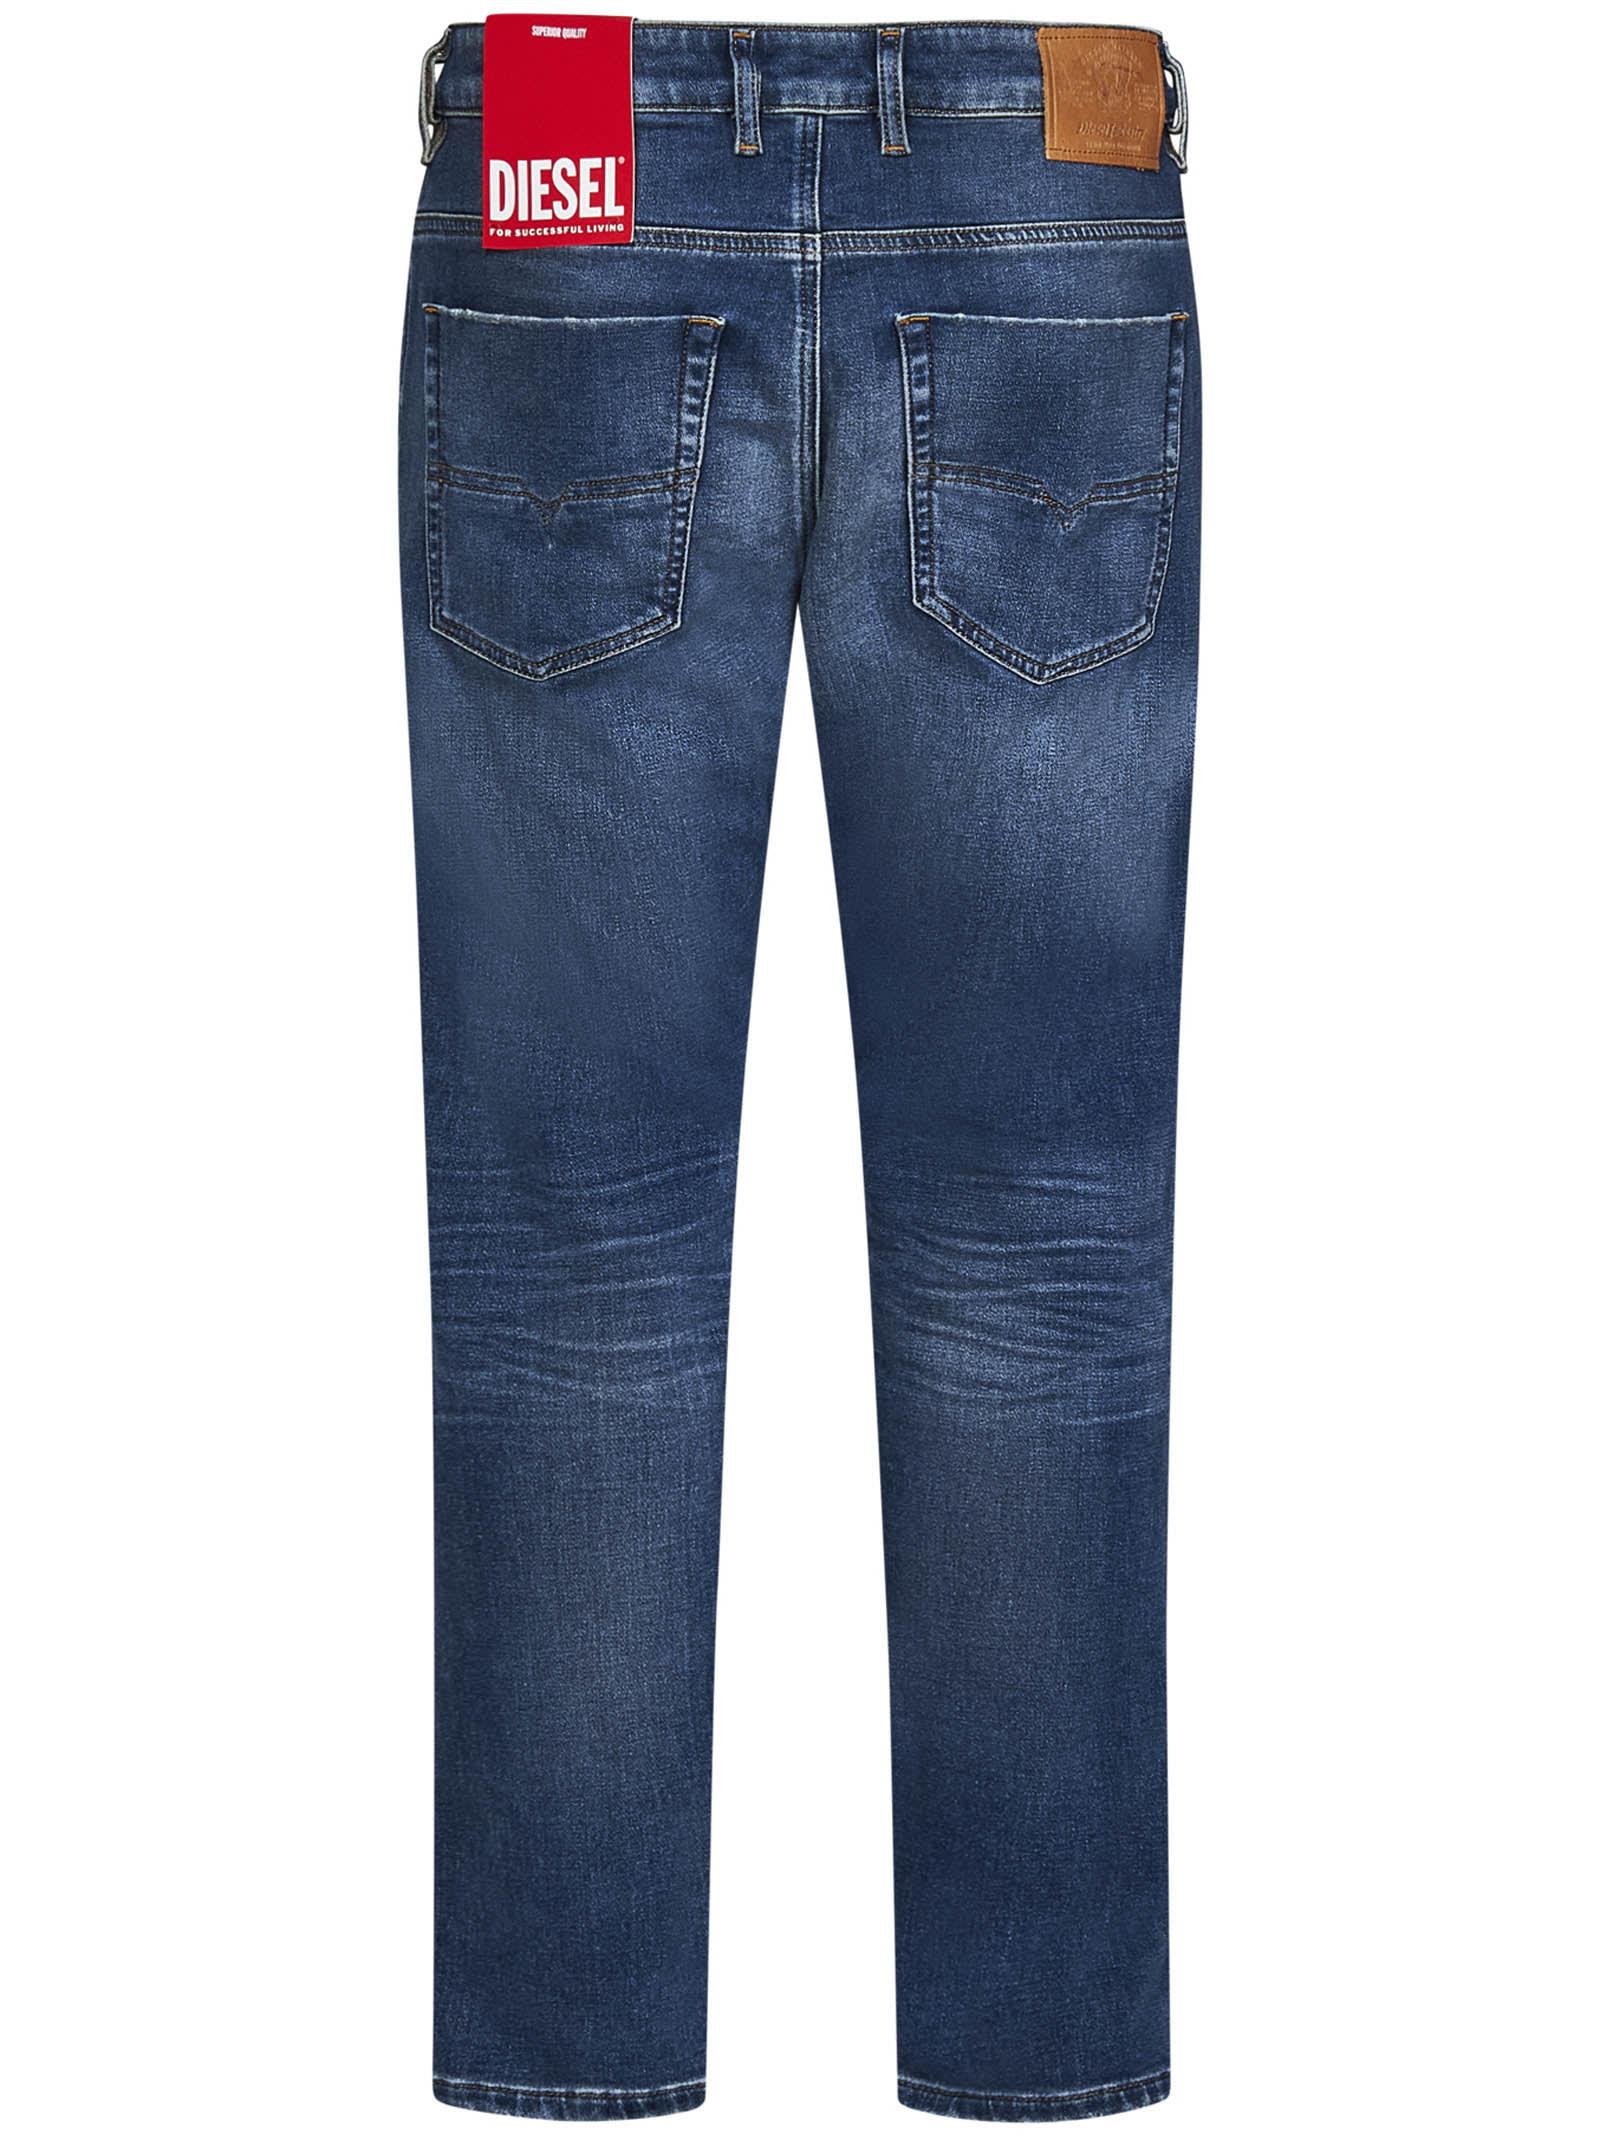 DIESEL Krooley joggjeans® 068cx Tapered Jeans in Blue for Men | Lyst